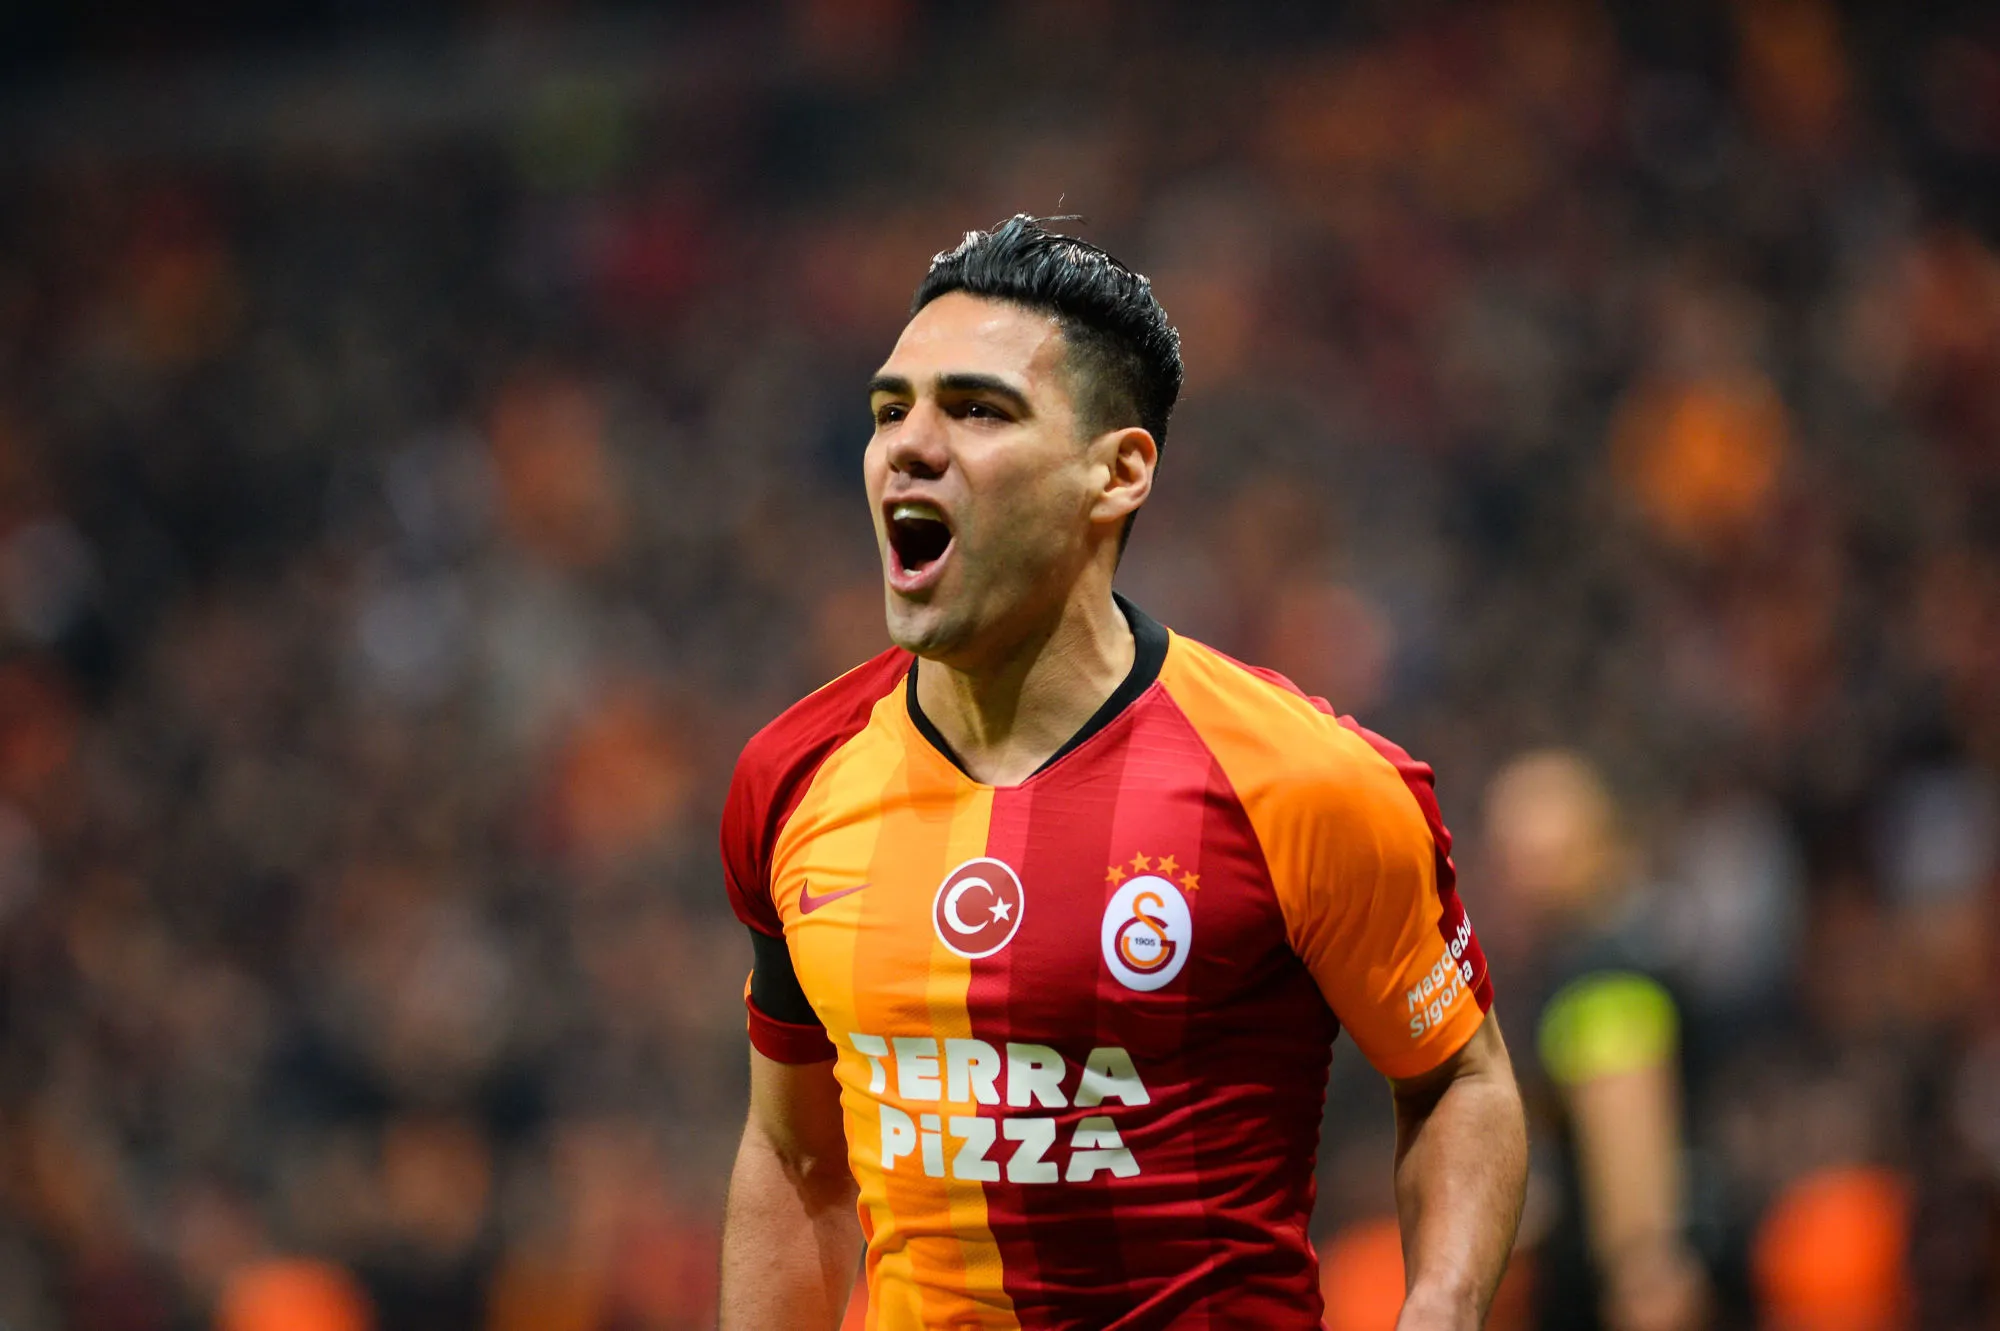 Pronostic Neftci Baku Galatasaray : Analyse, cotes et prono du match de Ligue Europa